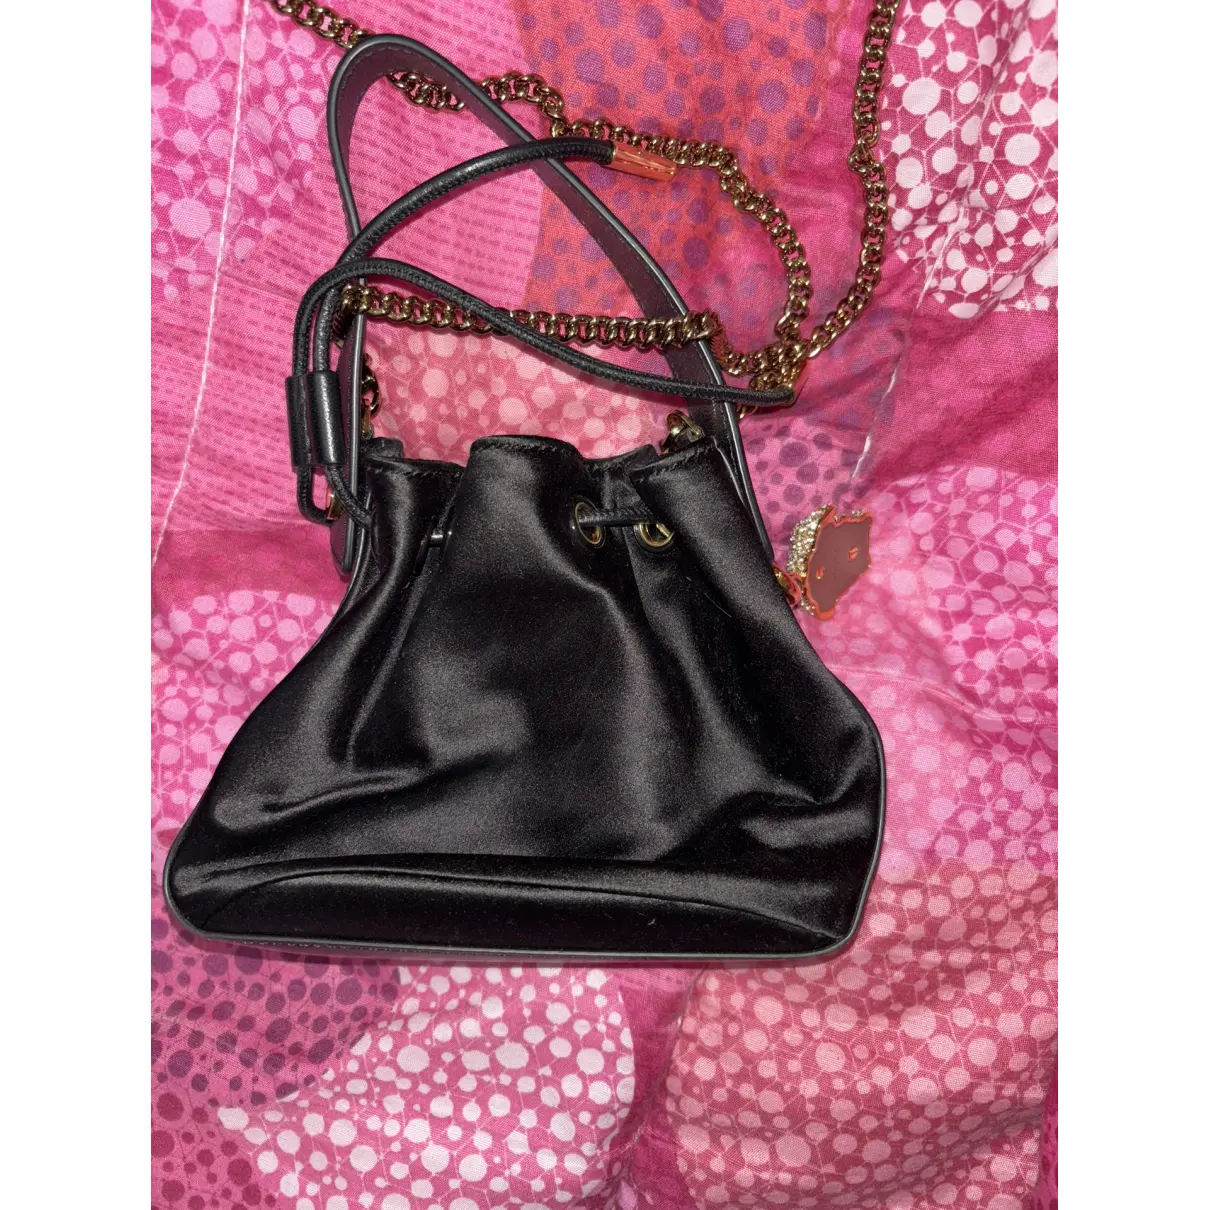 Buy Versace Leather crossbody bag online